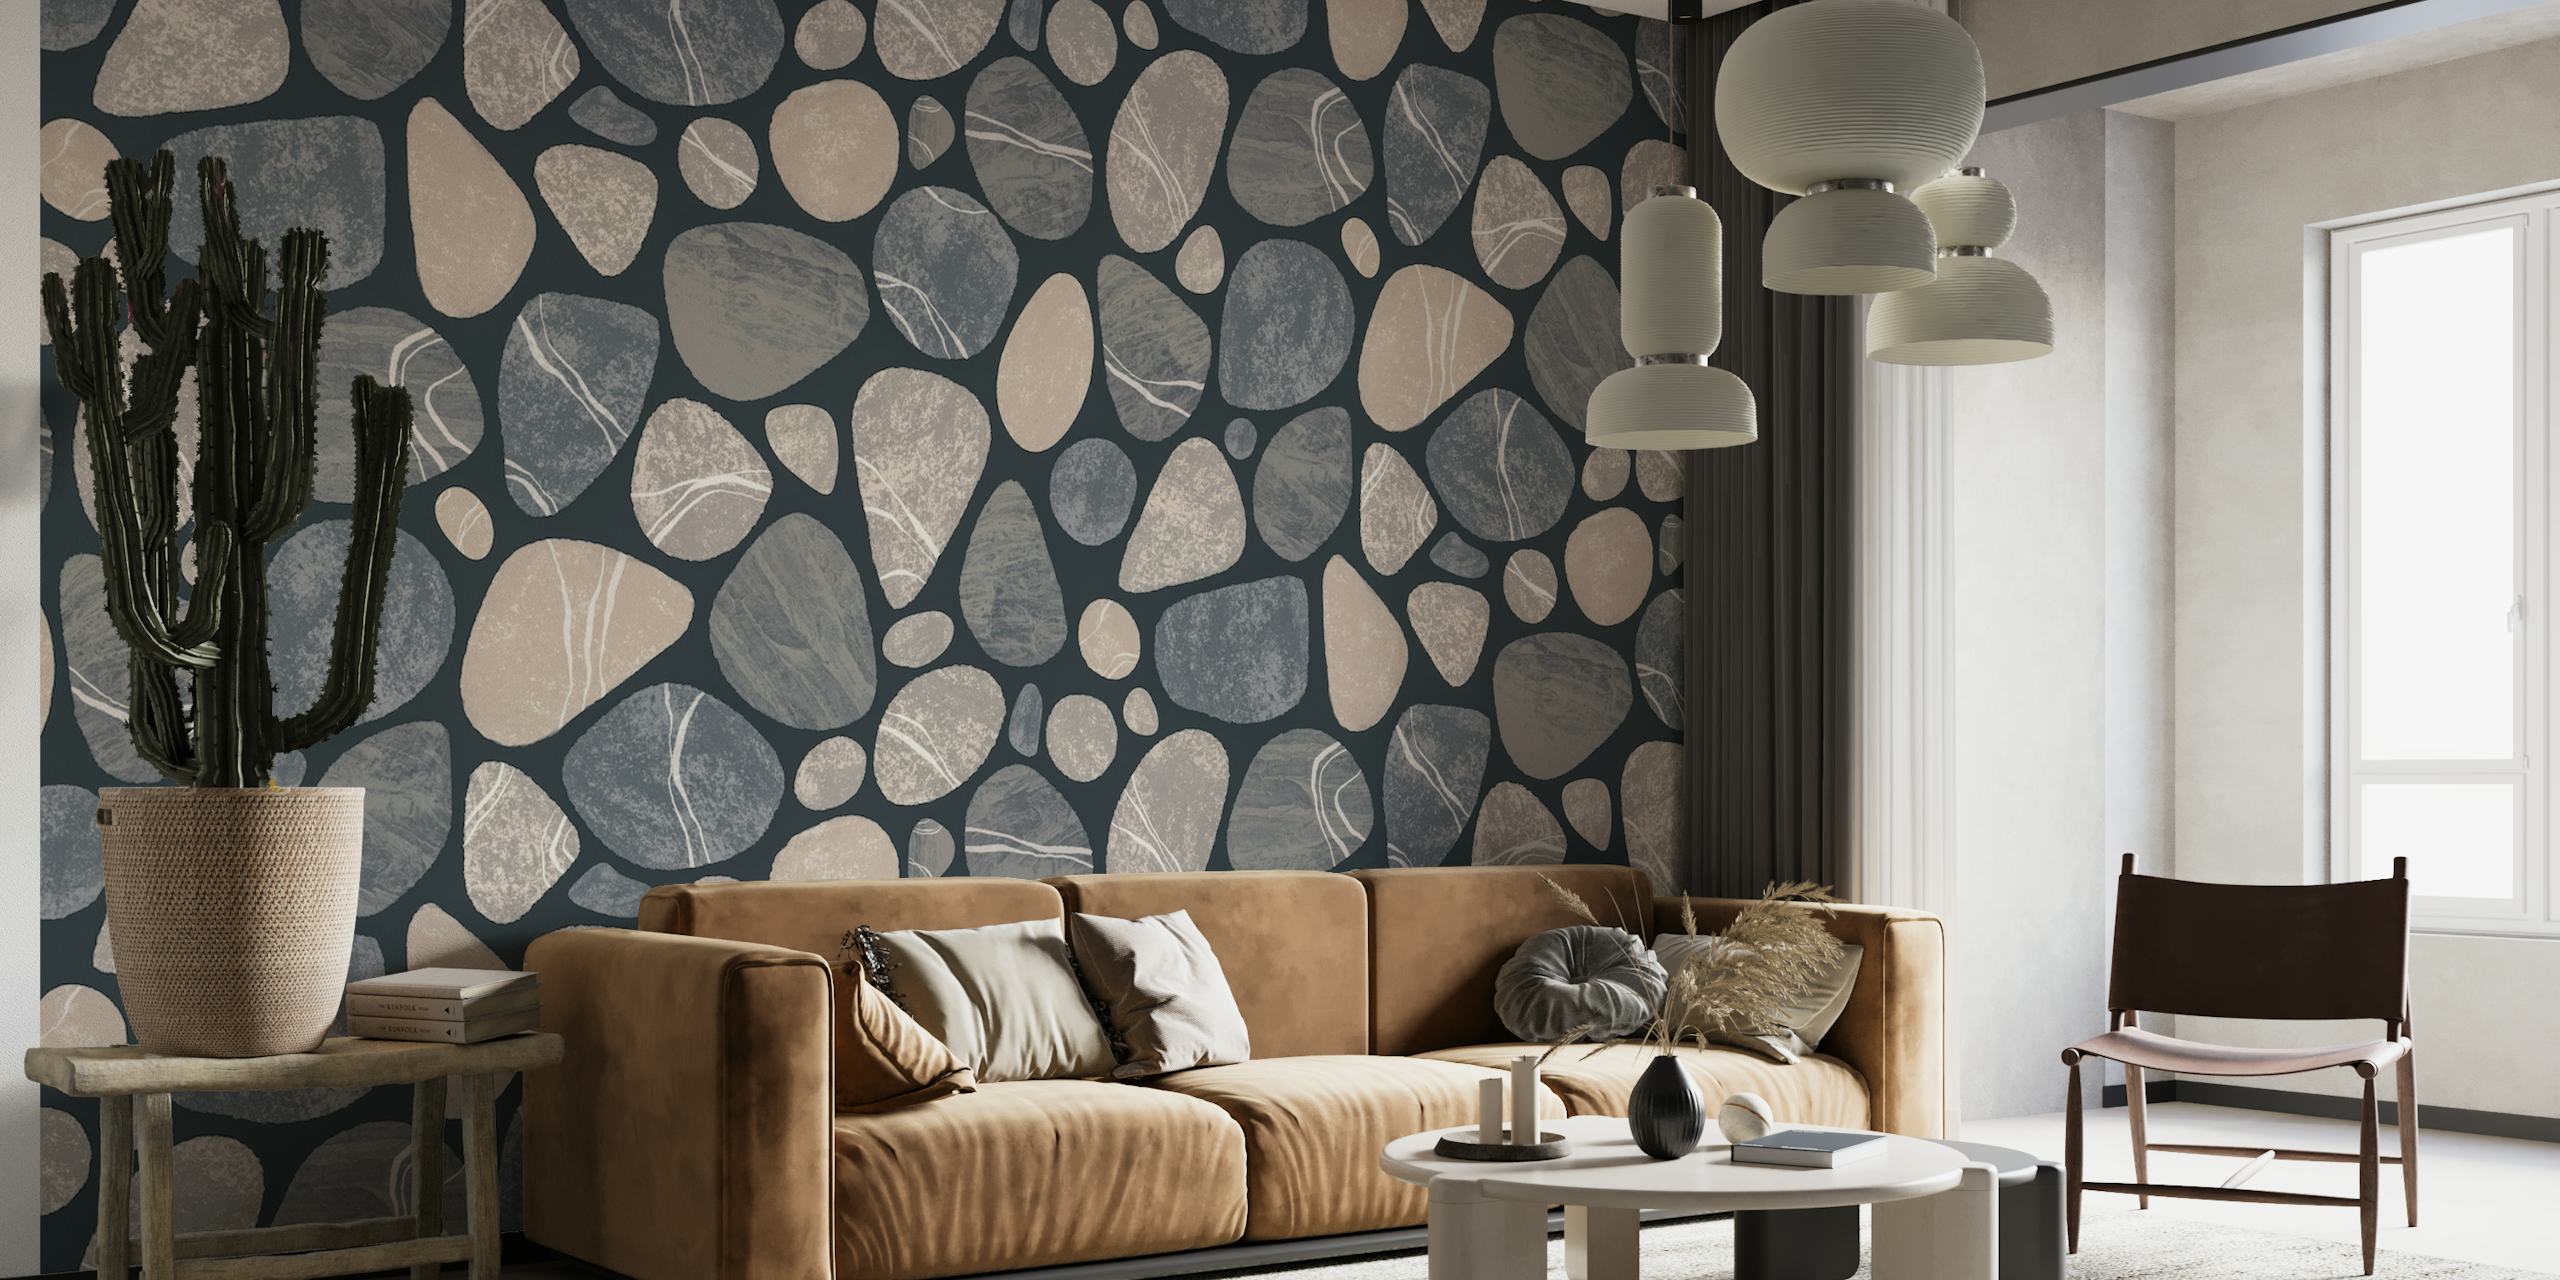 Fototapeta s béžovým a šedým oblázkovým vzorem pro interiér inspirovaný přírodou.